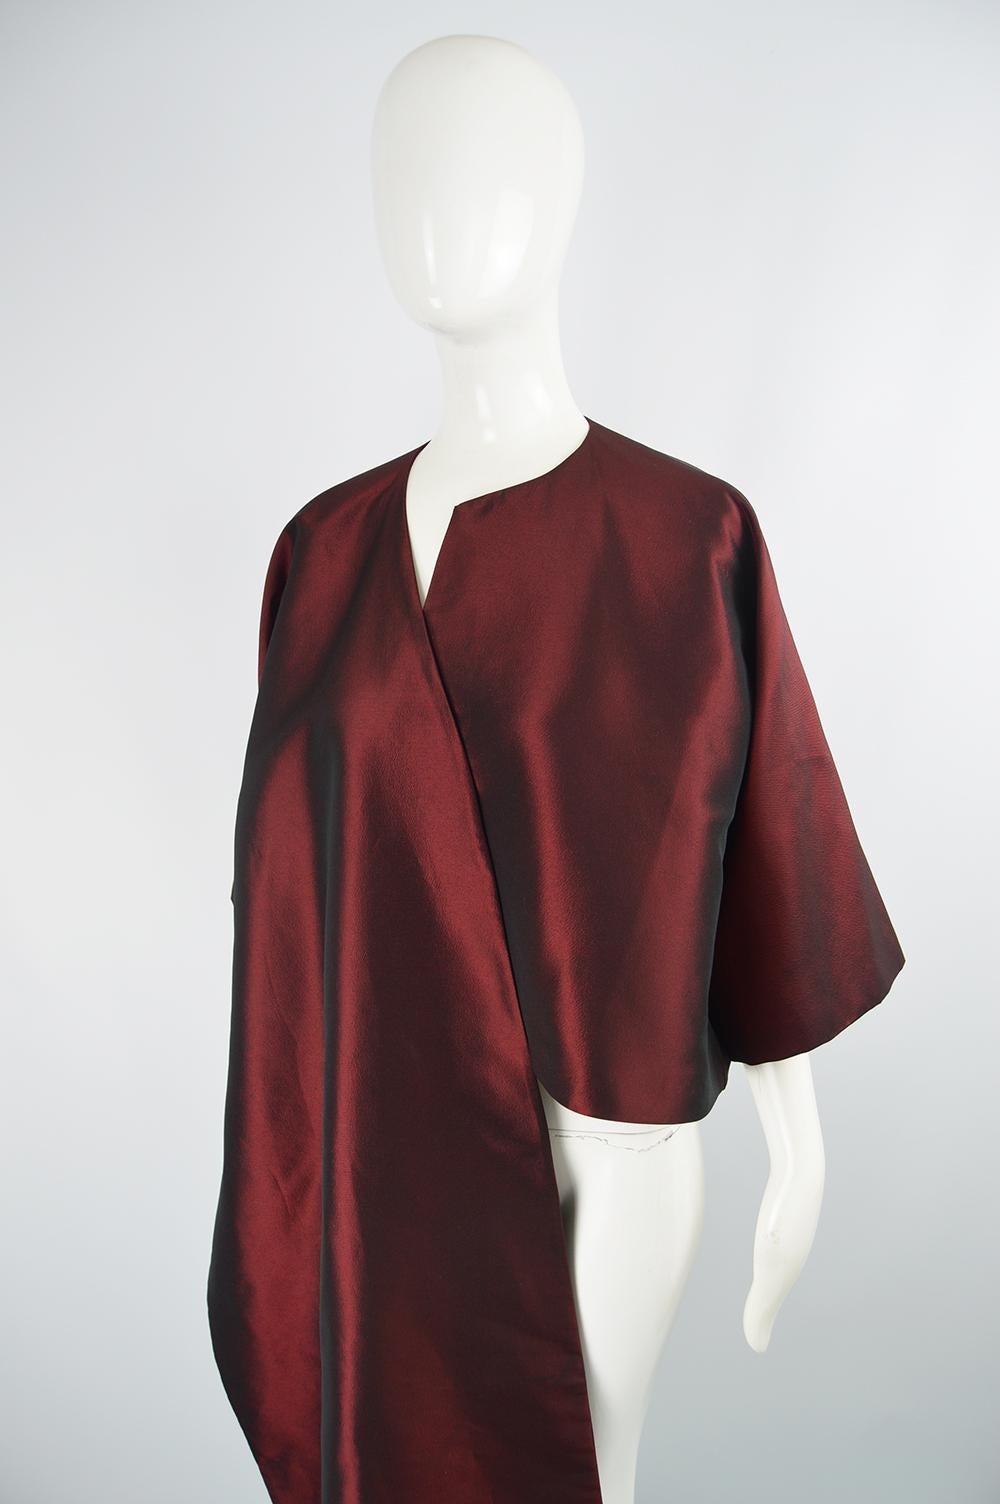 Women's Gianfranco Ferré Vintage Architectural Red Taffeta Evening Jacket, c. 1990s